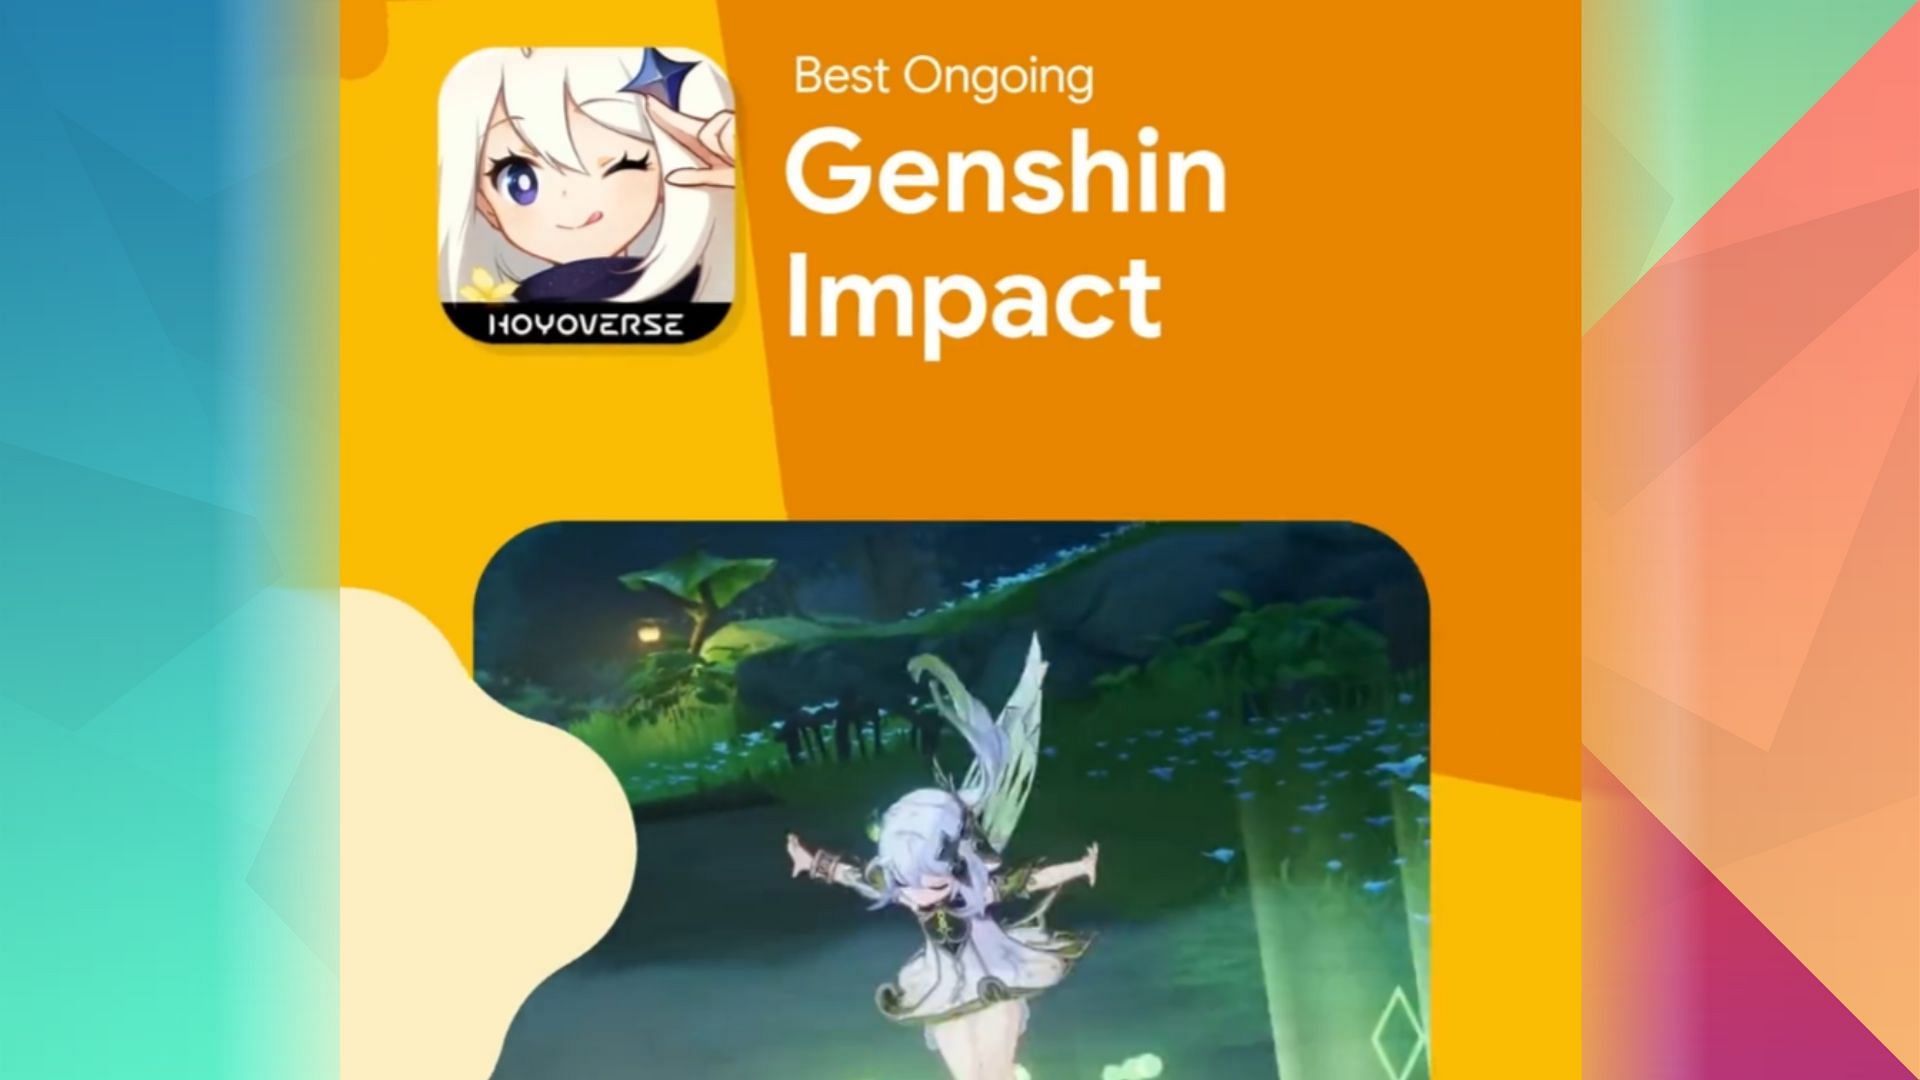 Genshin Impact wins Best Ongoing game on Google Play. : r/Genshin_Impact